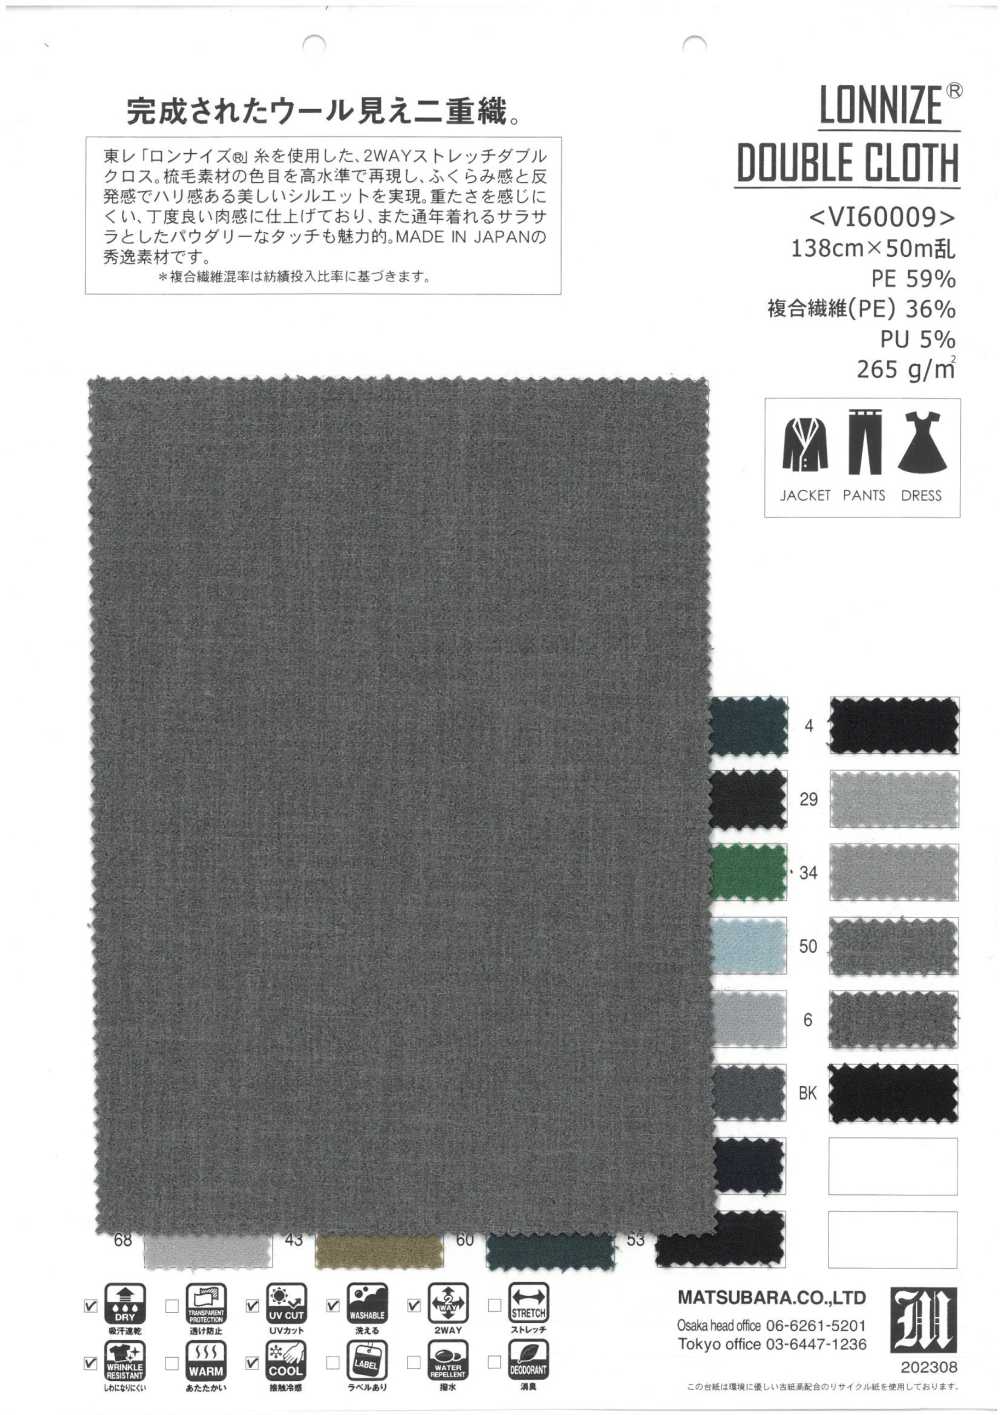 VI60009 PANO DUPLO LONNIZE®[Têxtil / Tecido] Matsubara